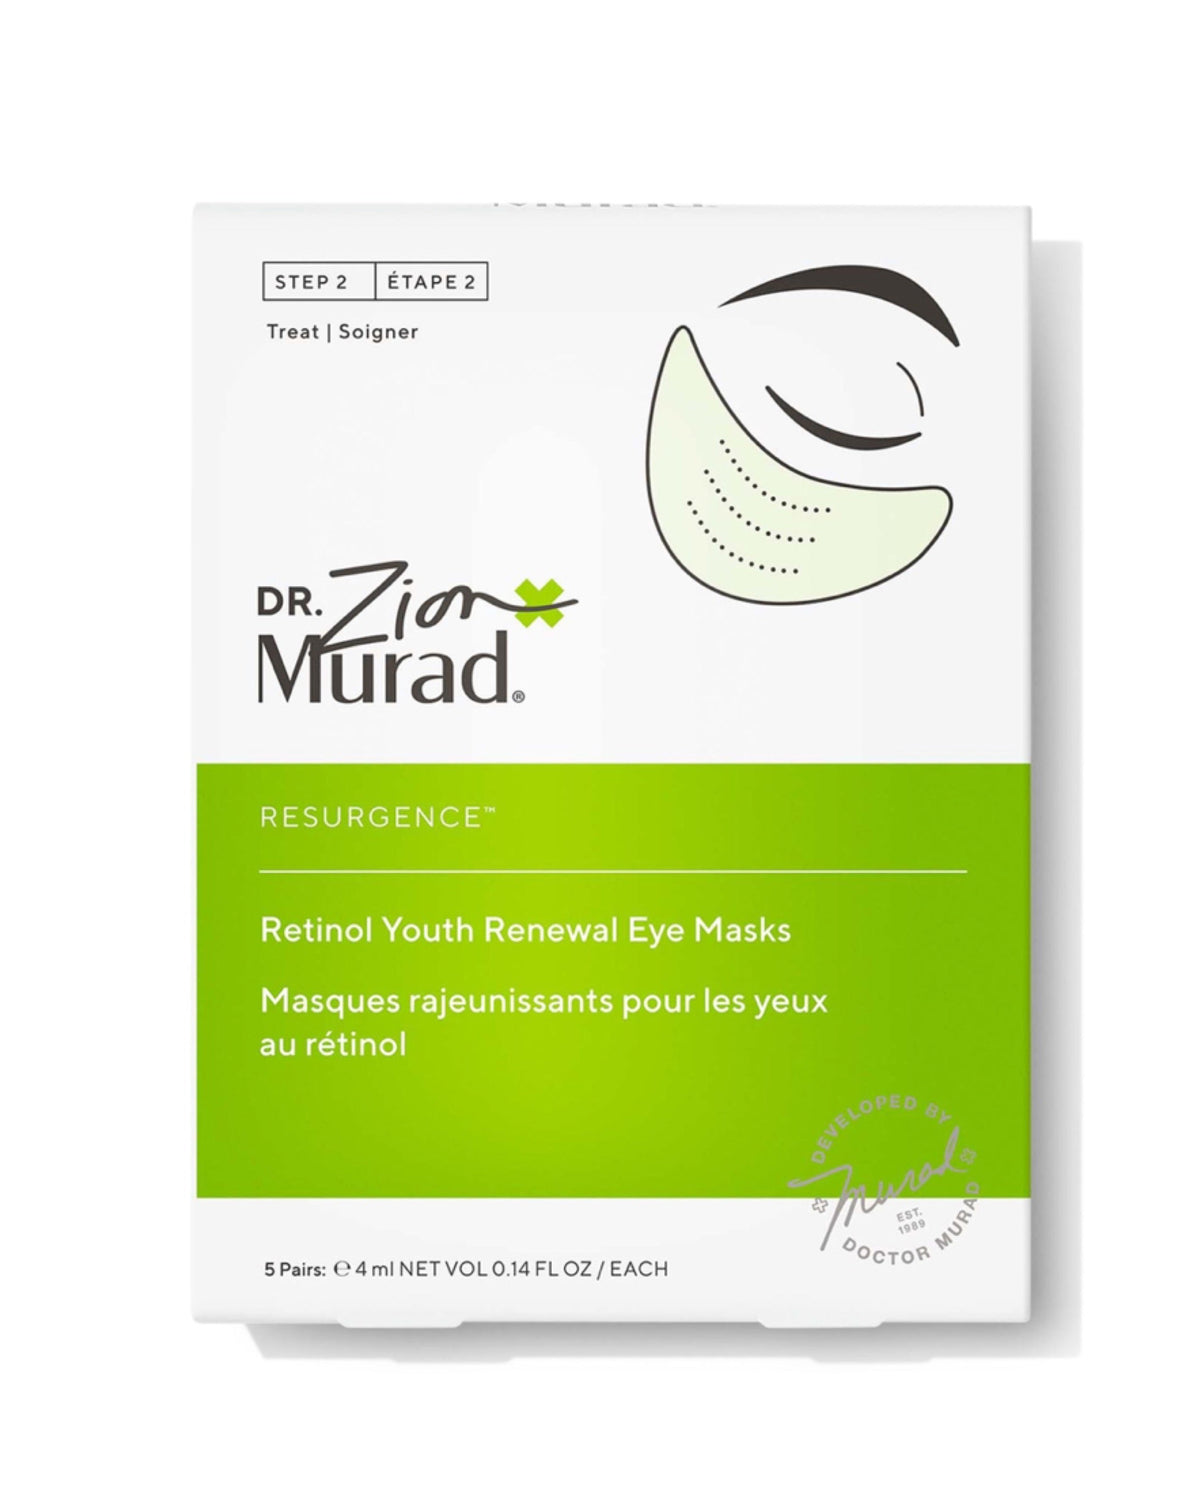 Murad x Dr. Zion Retinol Youth Renewal Eye Masks 5 pack